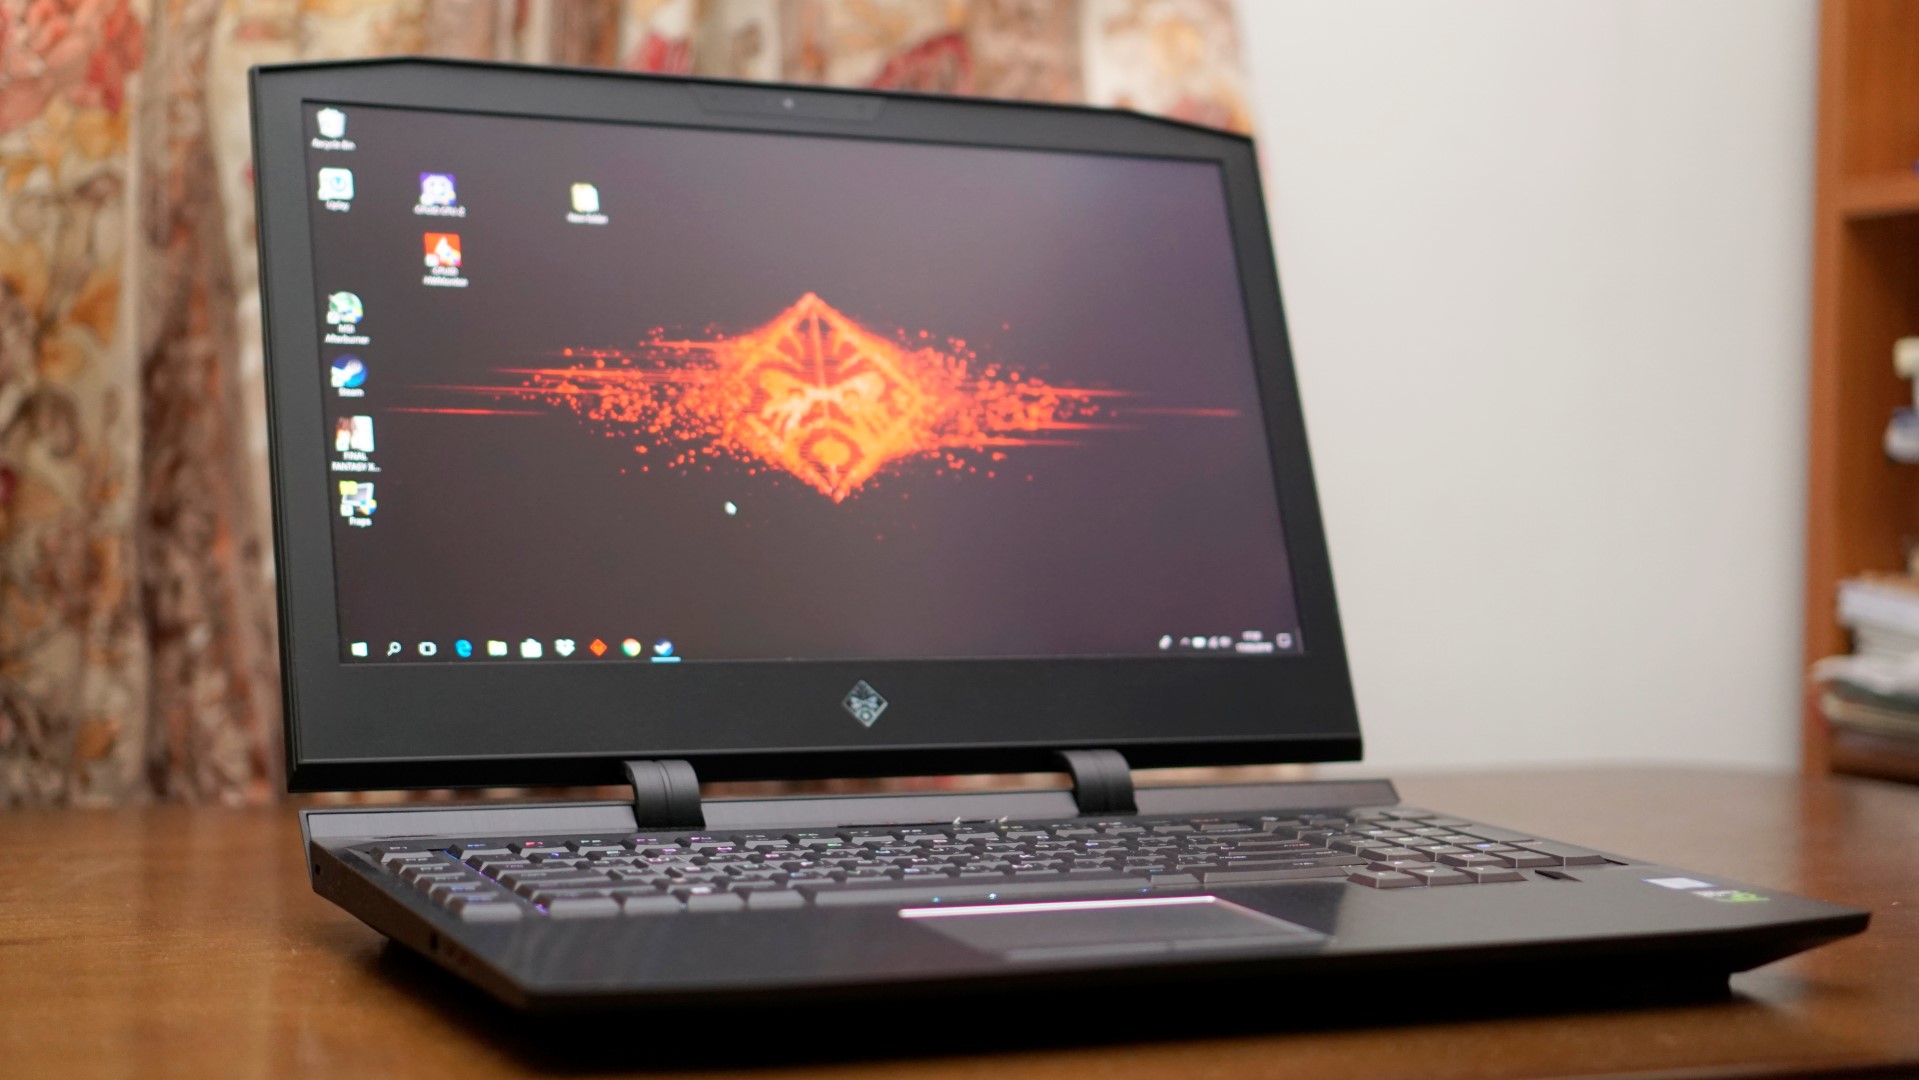 Harga dan Spesifikasi Laptop HP Terbaru 2019 [Lengkap]